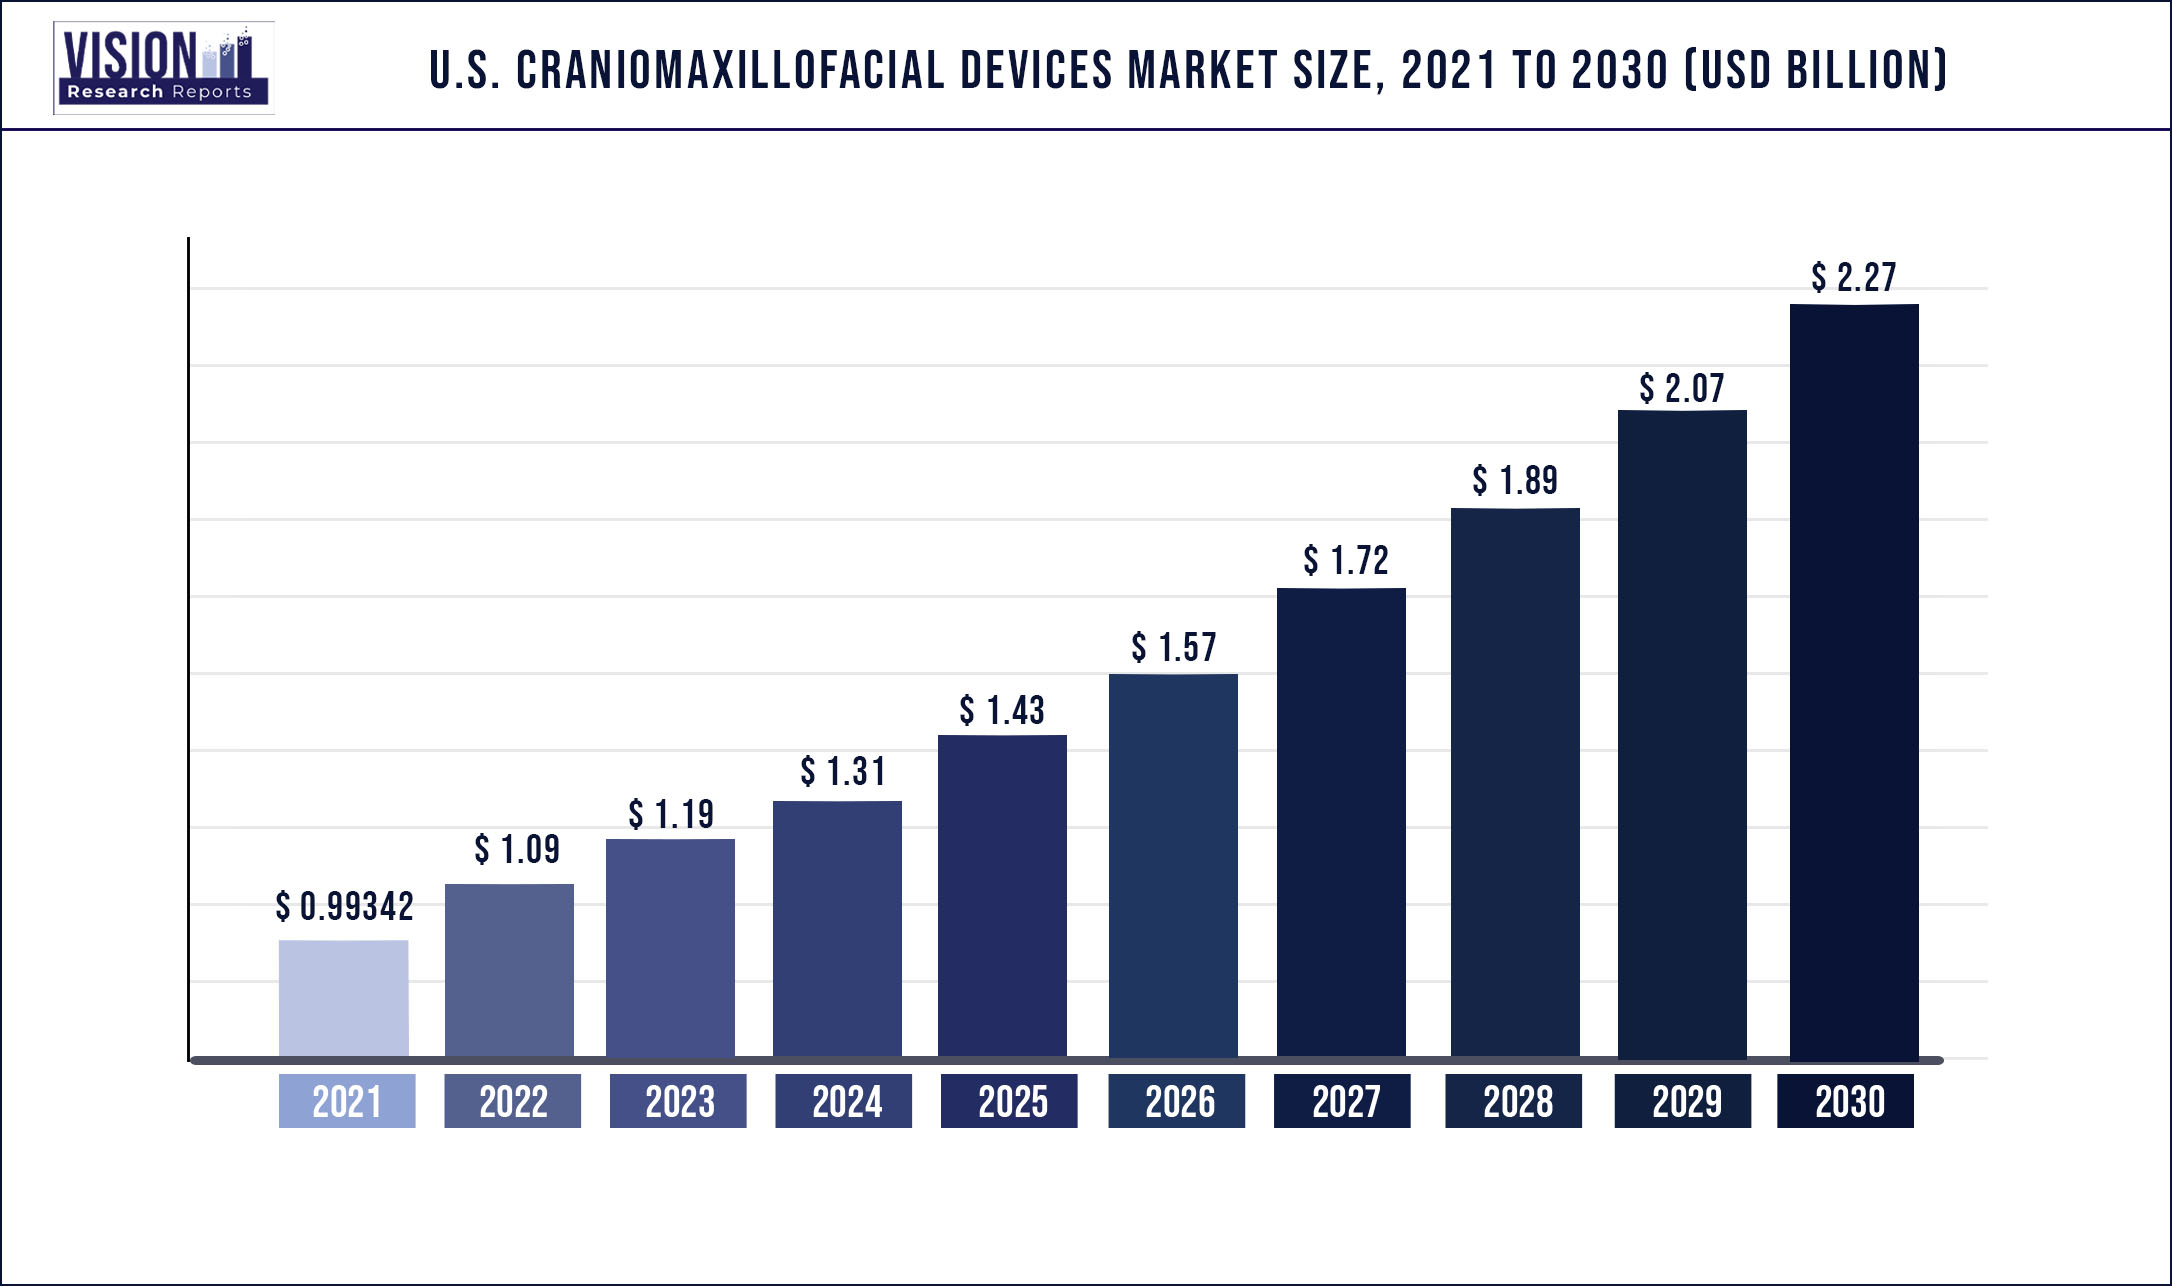 U.S. Craniomaxillofacial Devices Market Size 2021 to 2030